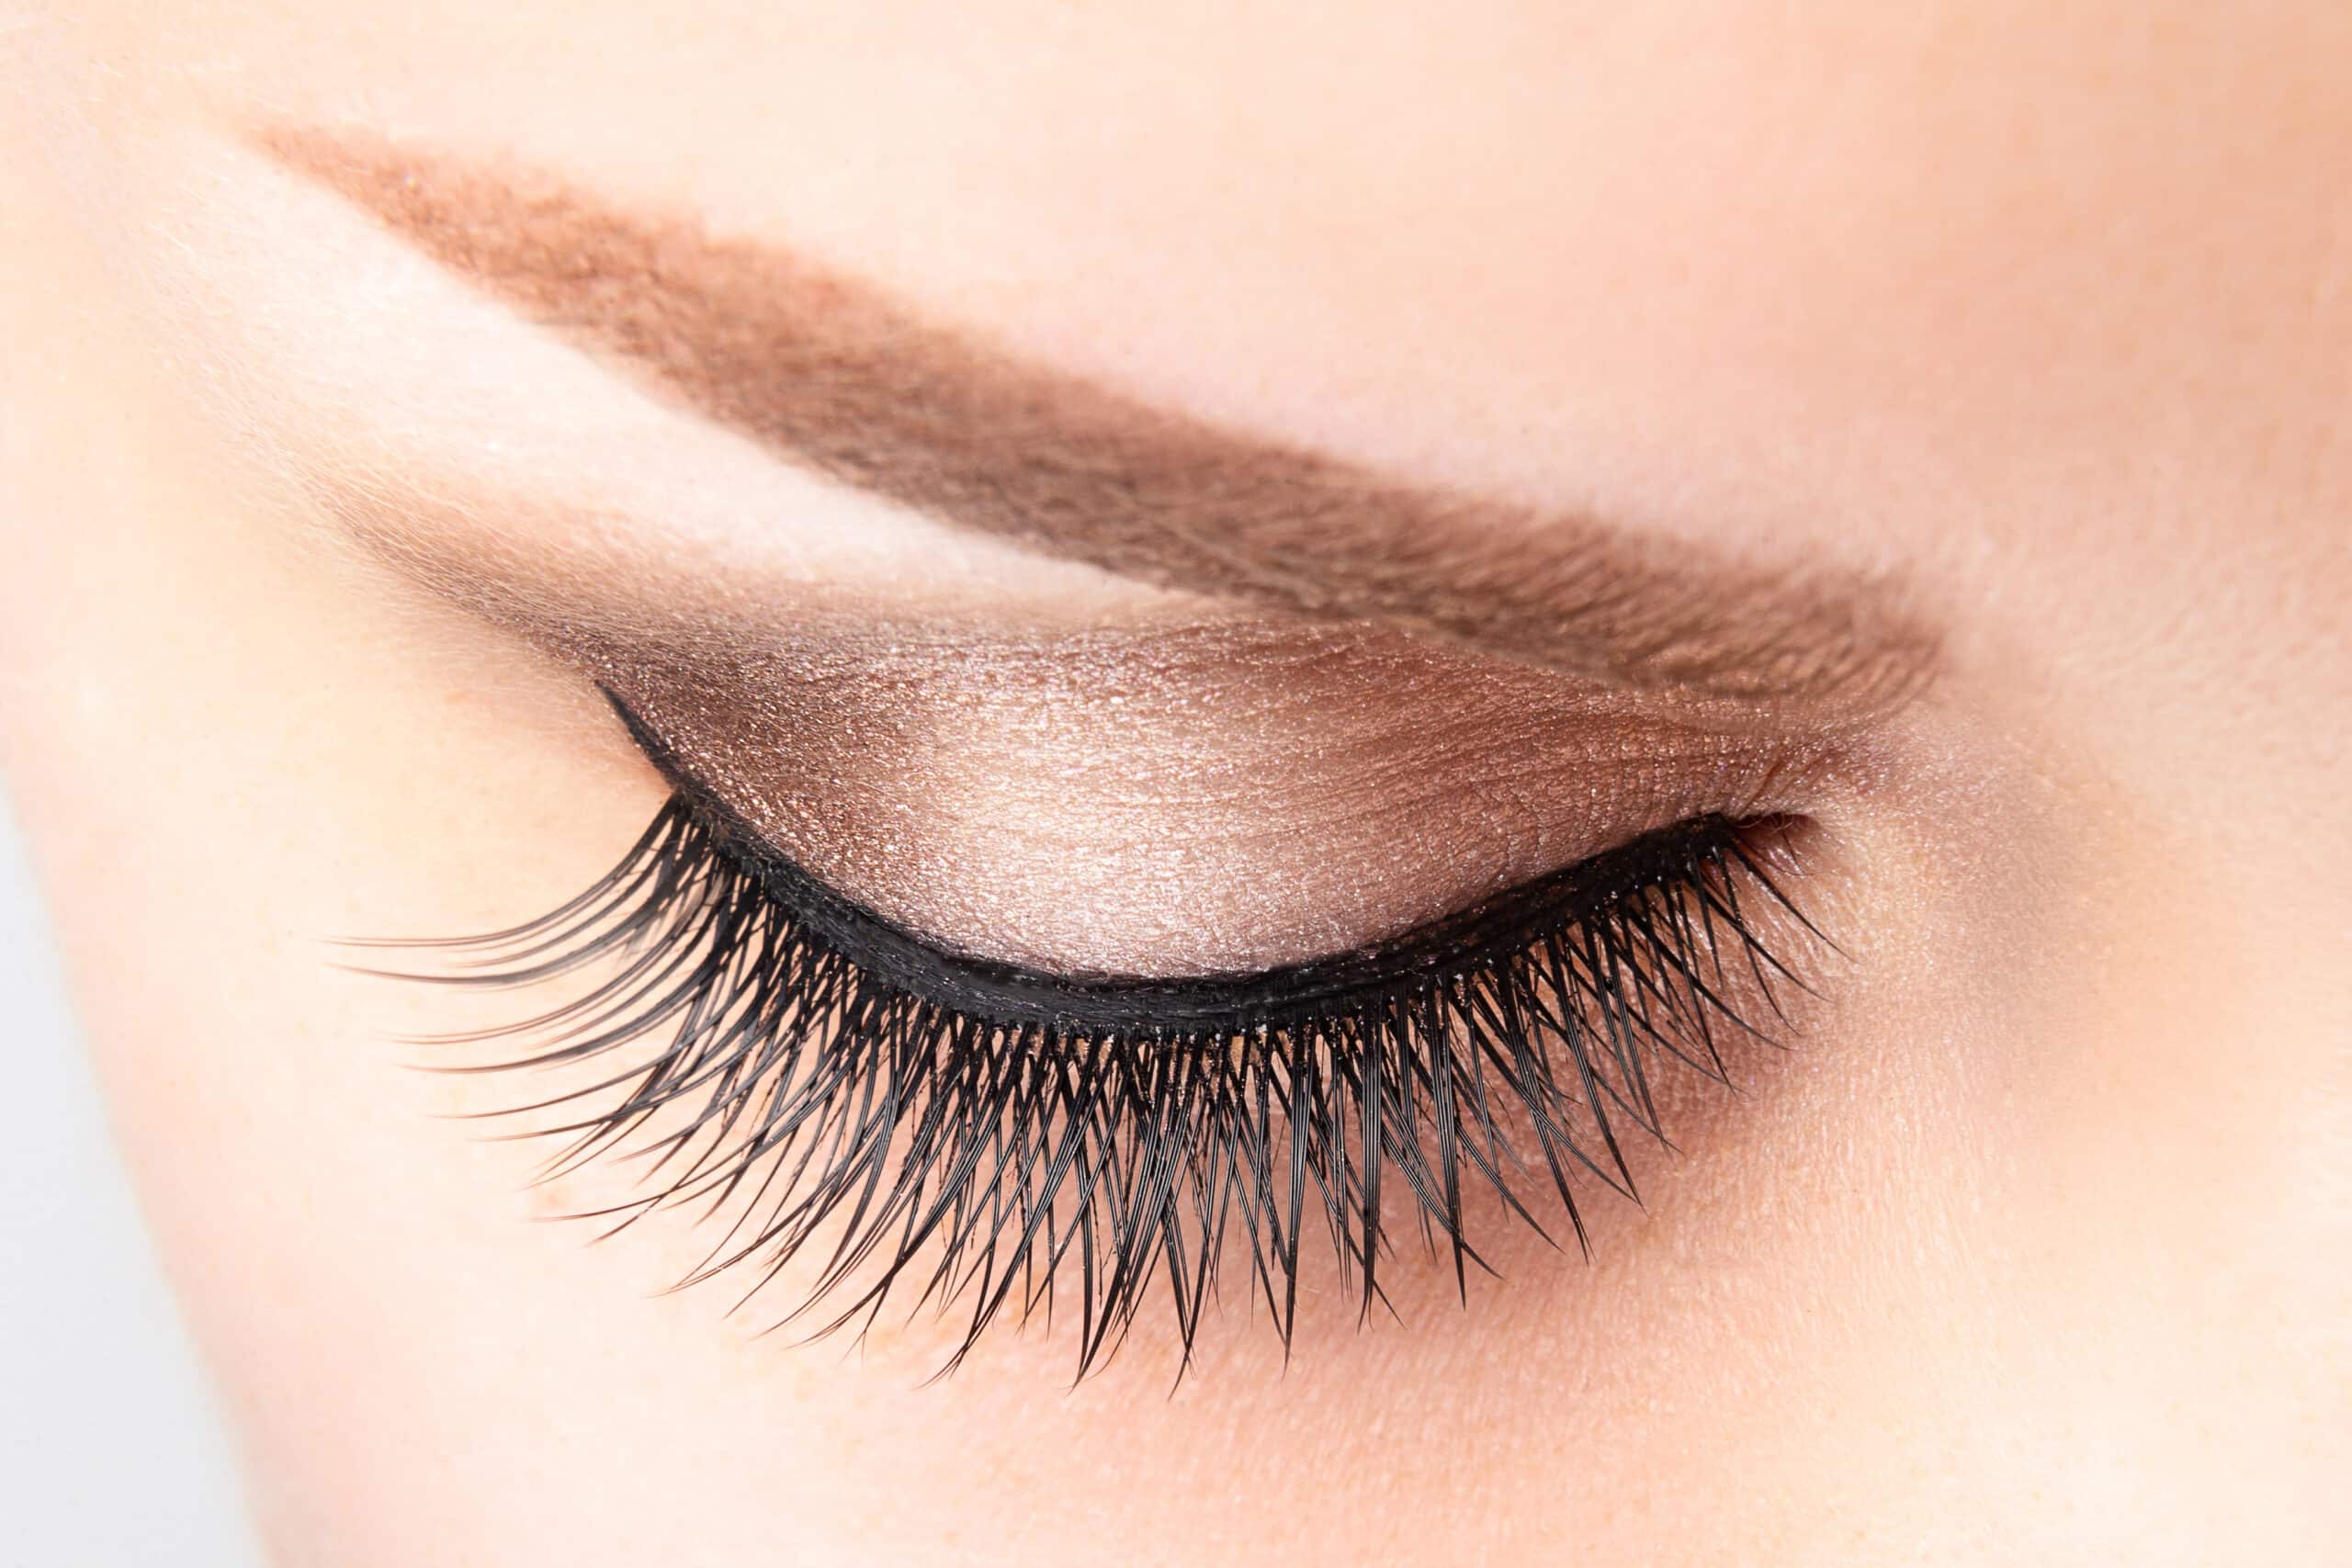 Female eye with long false eyelashes beautiful makeup and light brown eyebrow close up